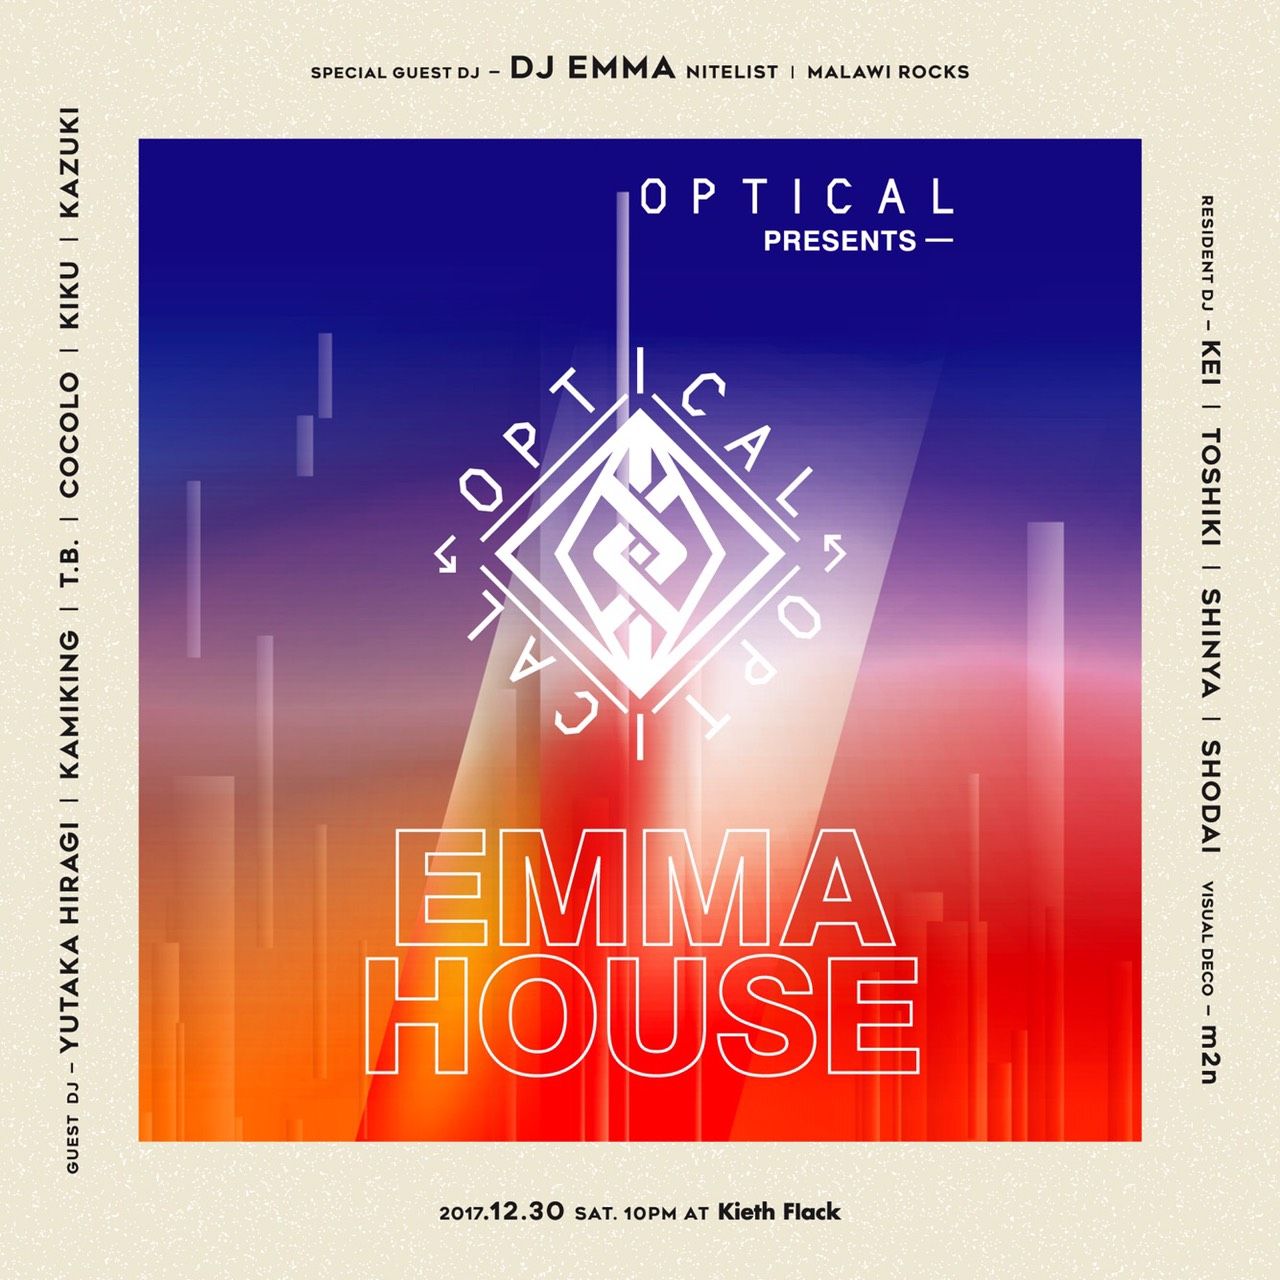 OPTICAL presents. EMMA HOUSE